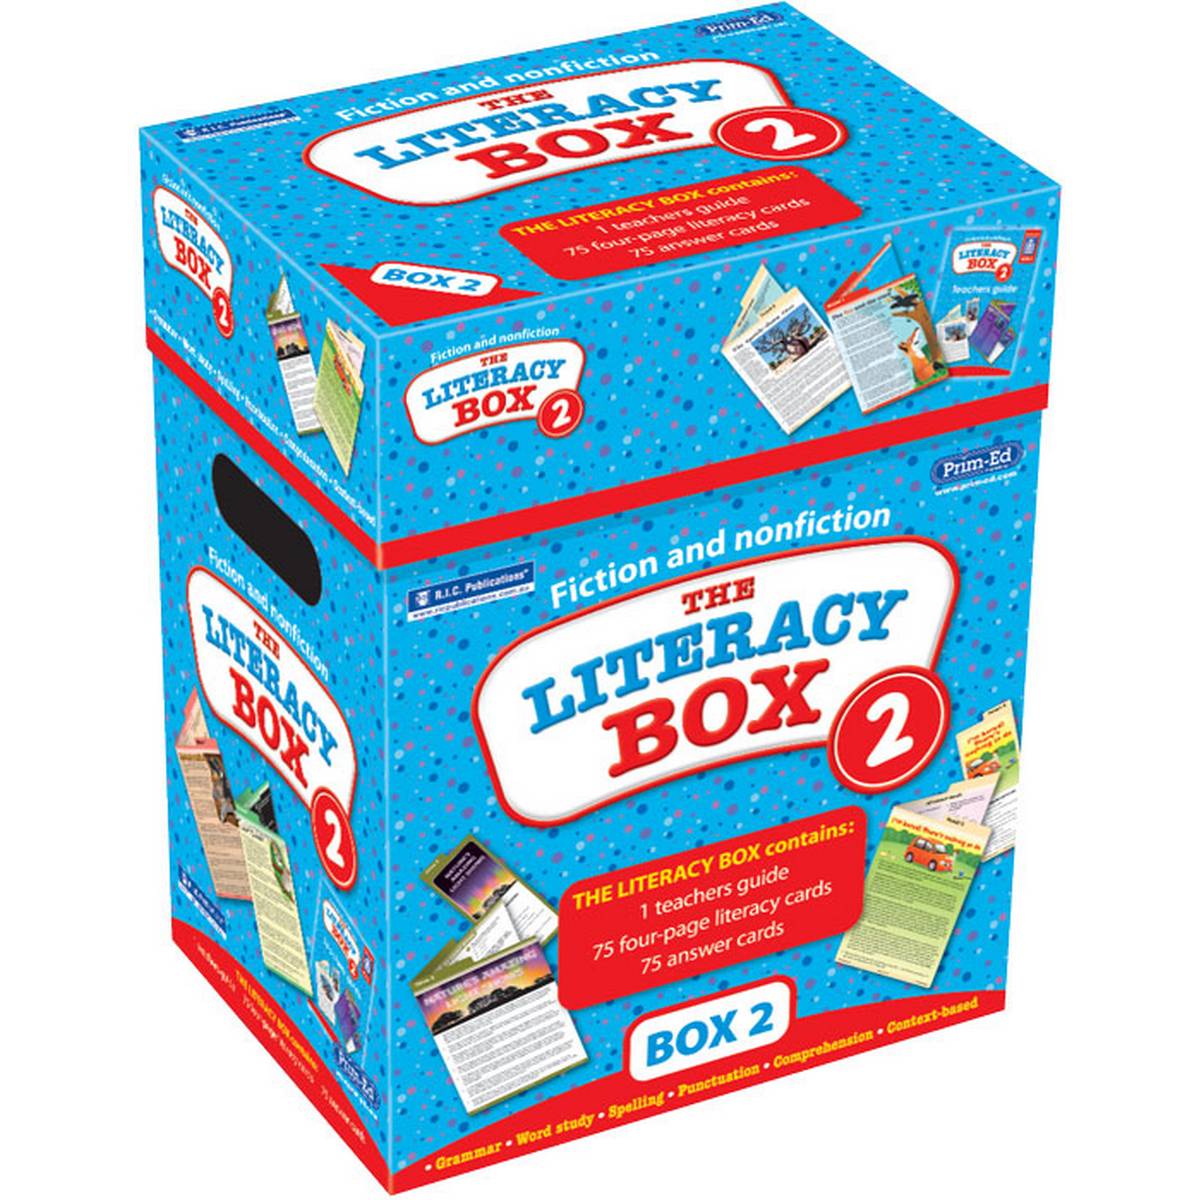 The Literacy Box 2